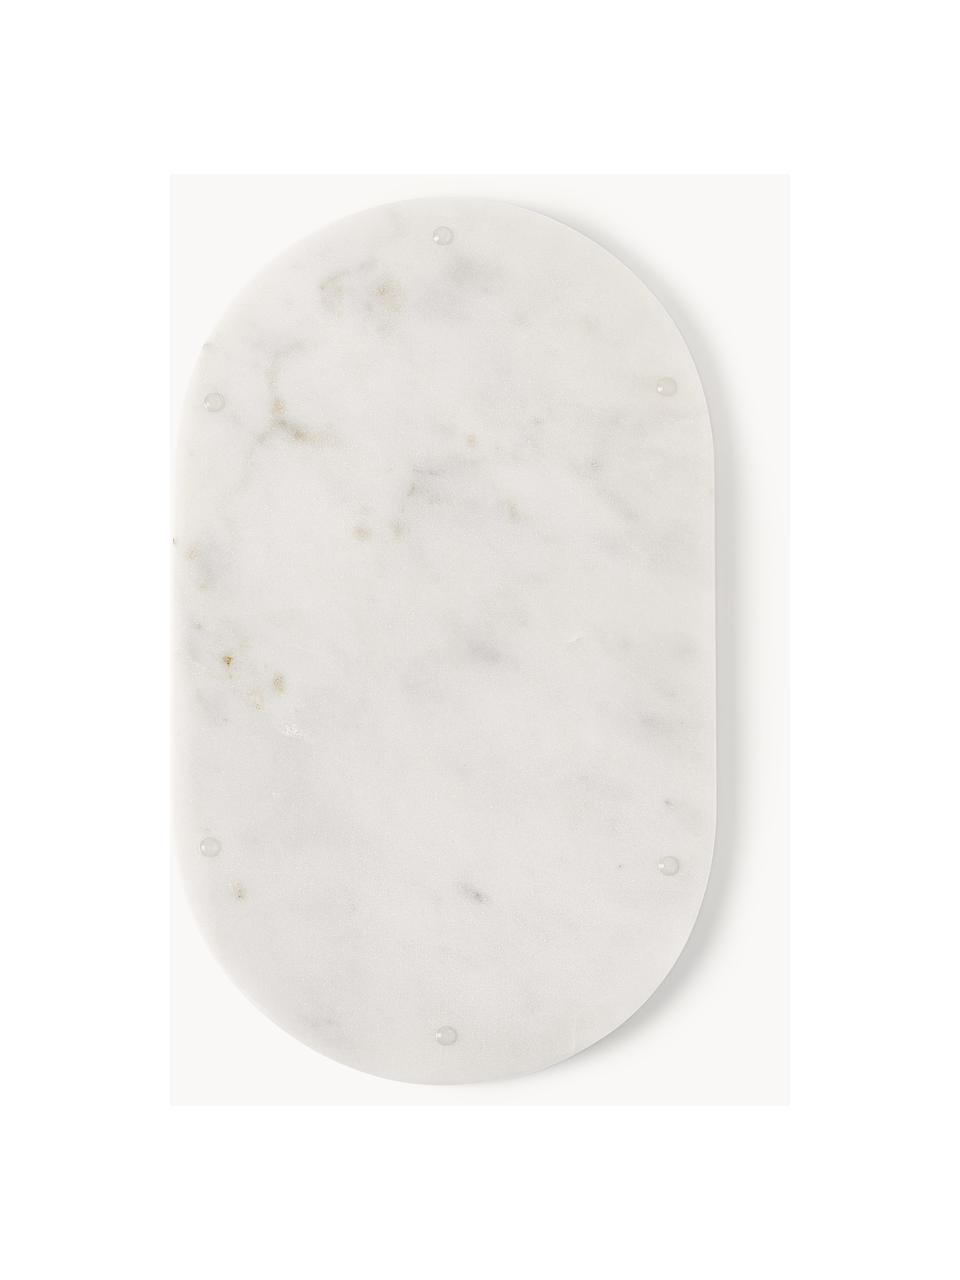 Ručně vyrobený mramorový servírovací talíř Aika, Mramor, Bílá, mramorovaná, Š 36 cm, H 22 cm